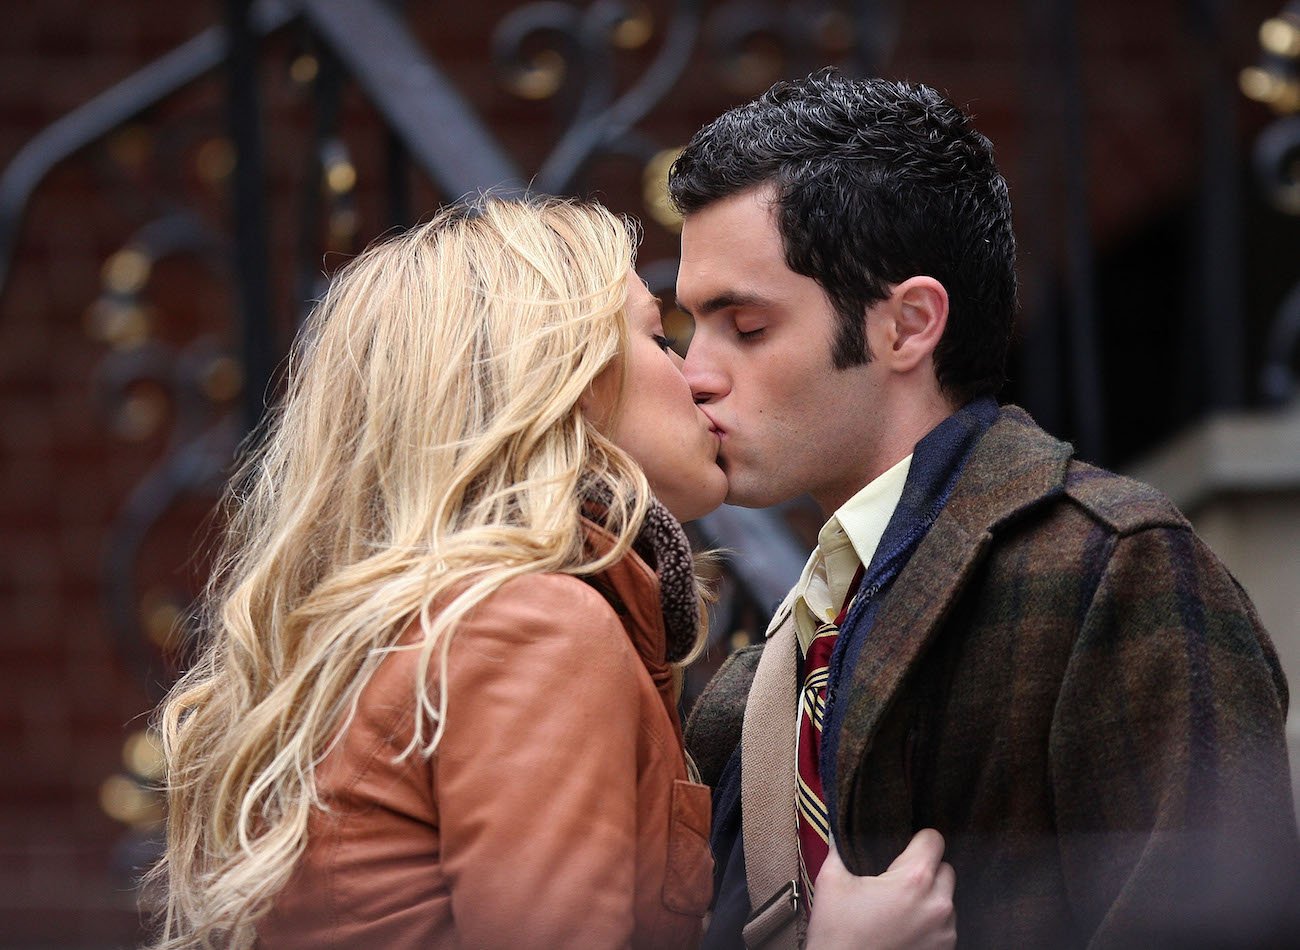 Blake Lively and Penn Badgley kissing on the set of 'Gossip Girl'